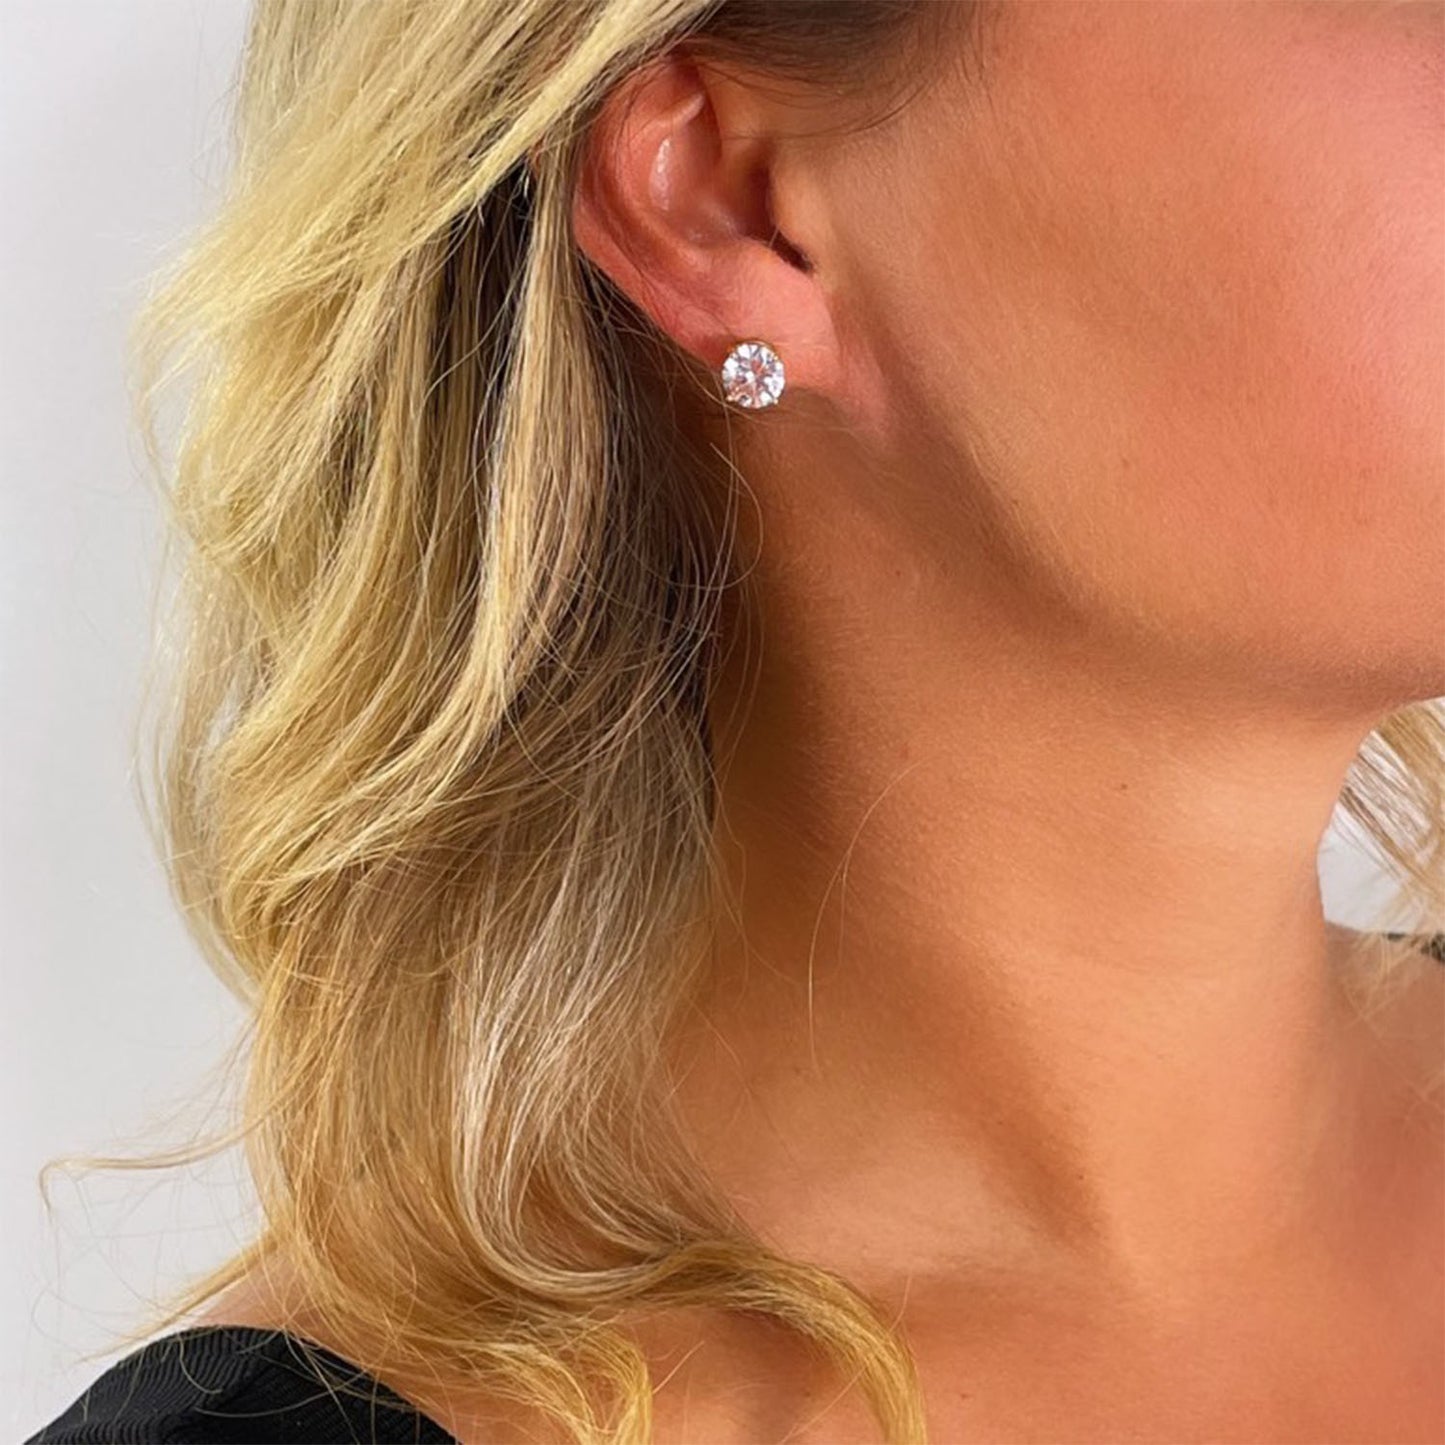 Audrey 2 Ct. Round CZ Diamond Stud Earrings, Gold - Zahra Jewelry